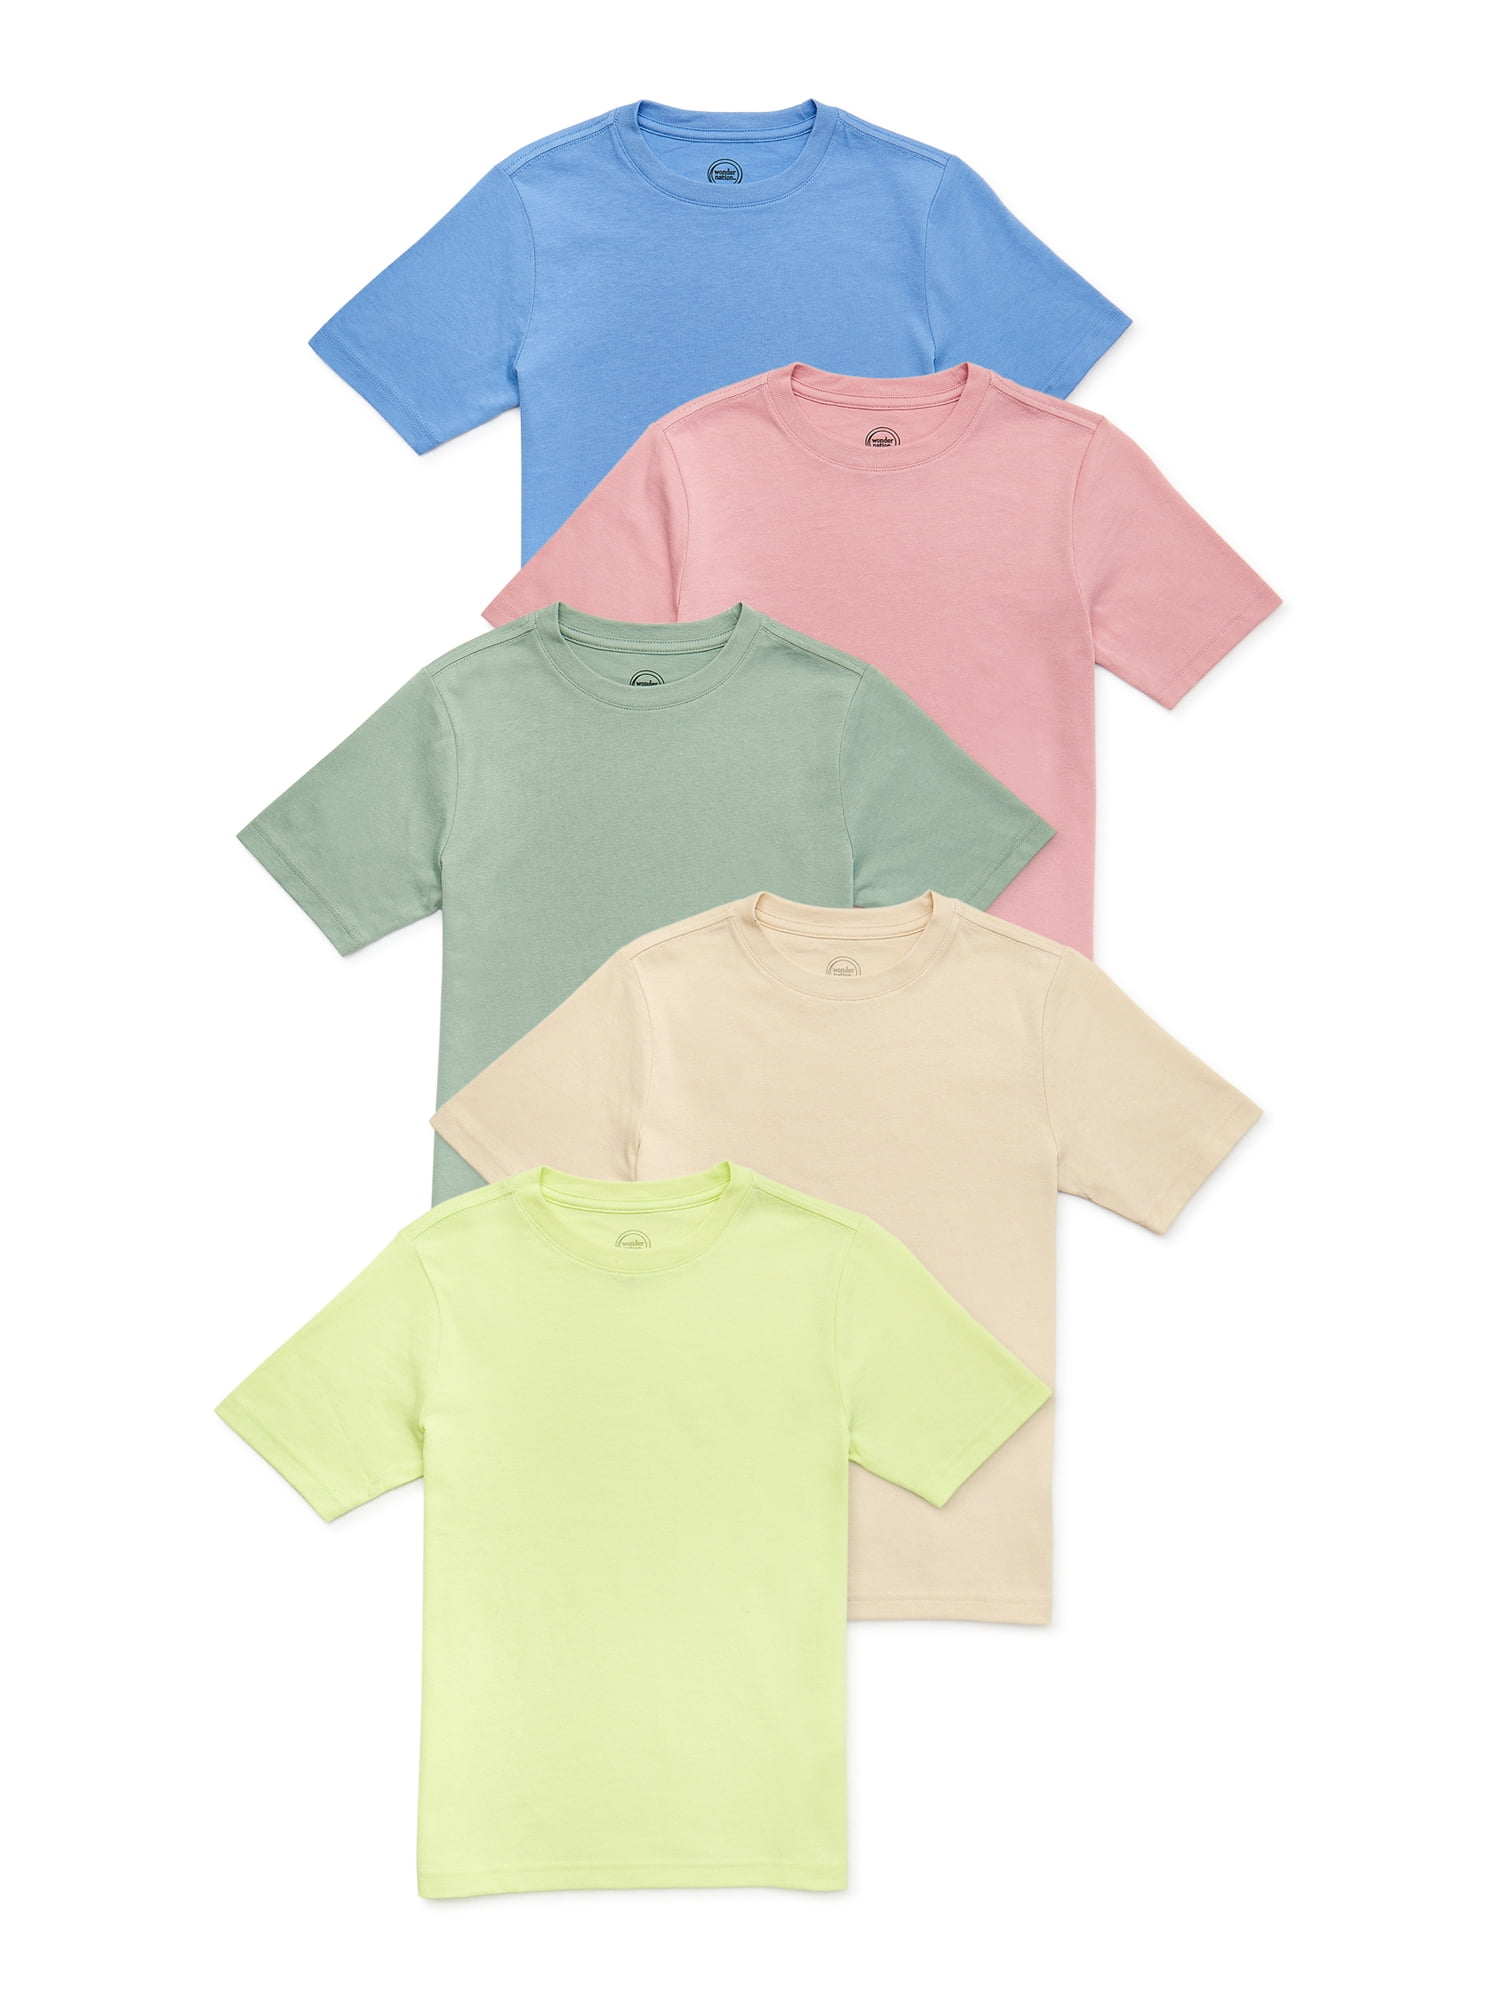 4-18 Boys Wonder Kid Nation Tough Sizes T-Shirt, 5-Pack, & Sleeve Husky Short